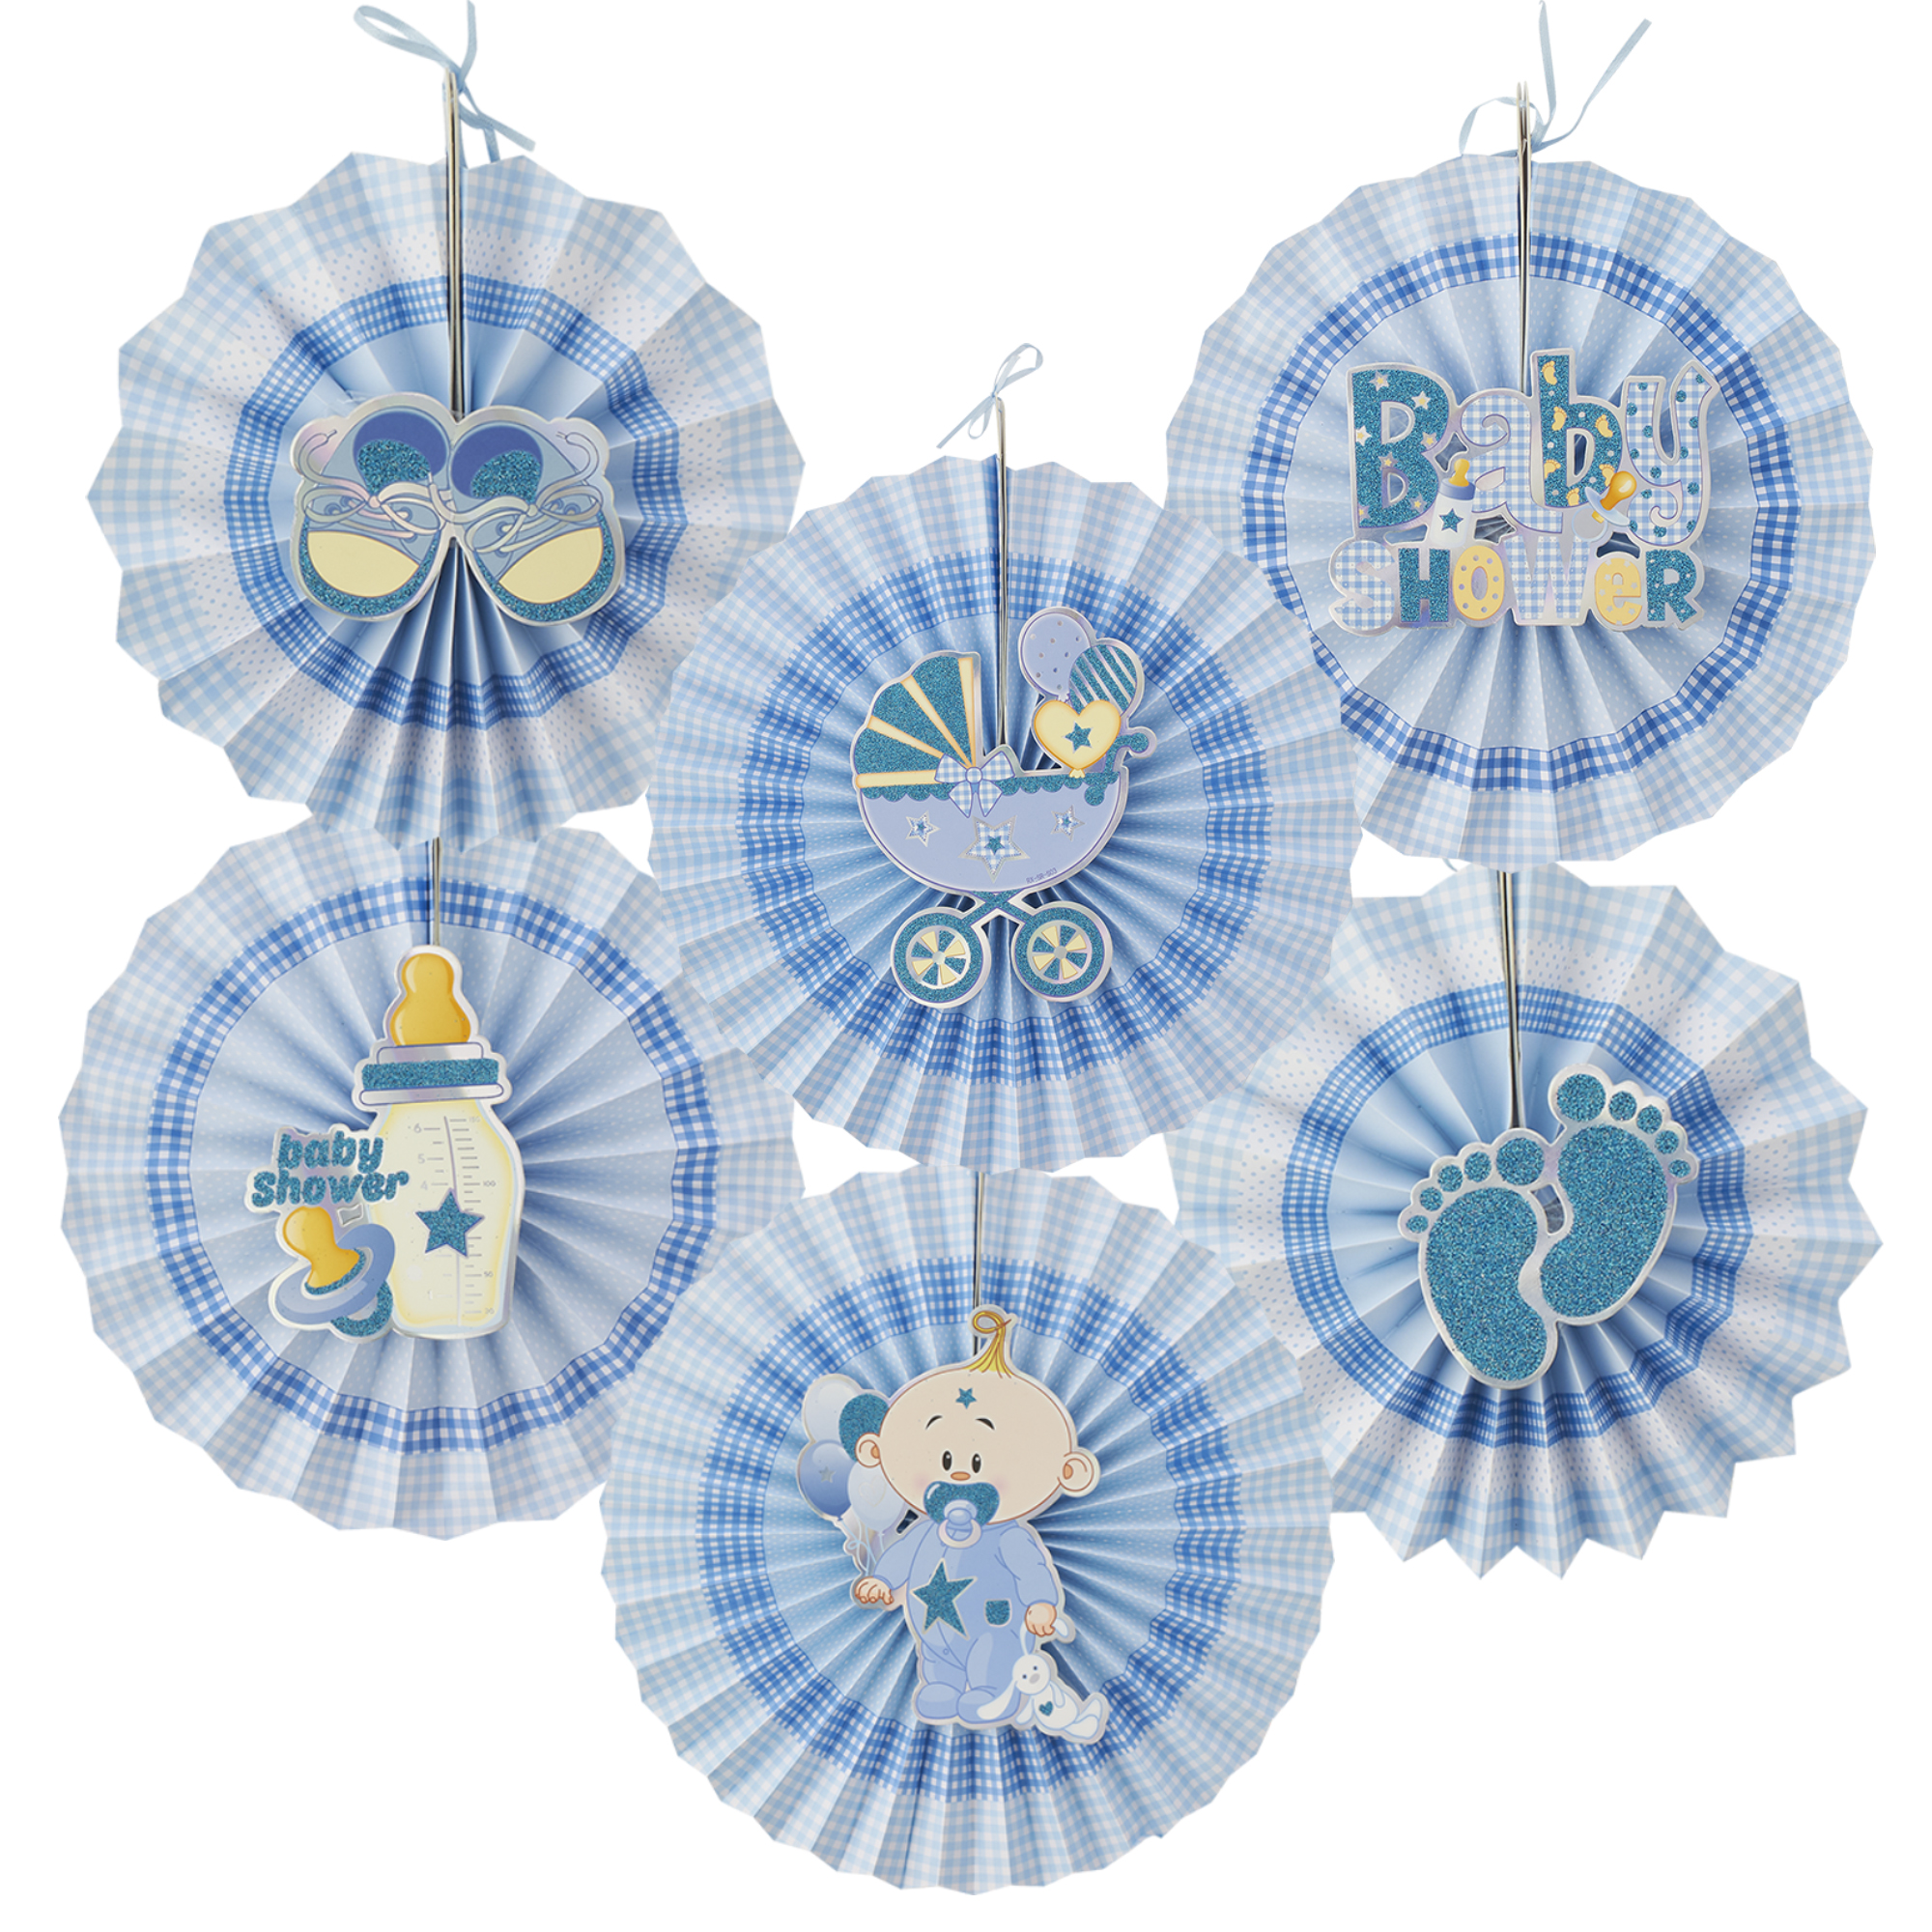 Hanging Paper Fan "Baby Shower" 6pc Set - Blue